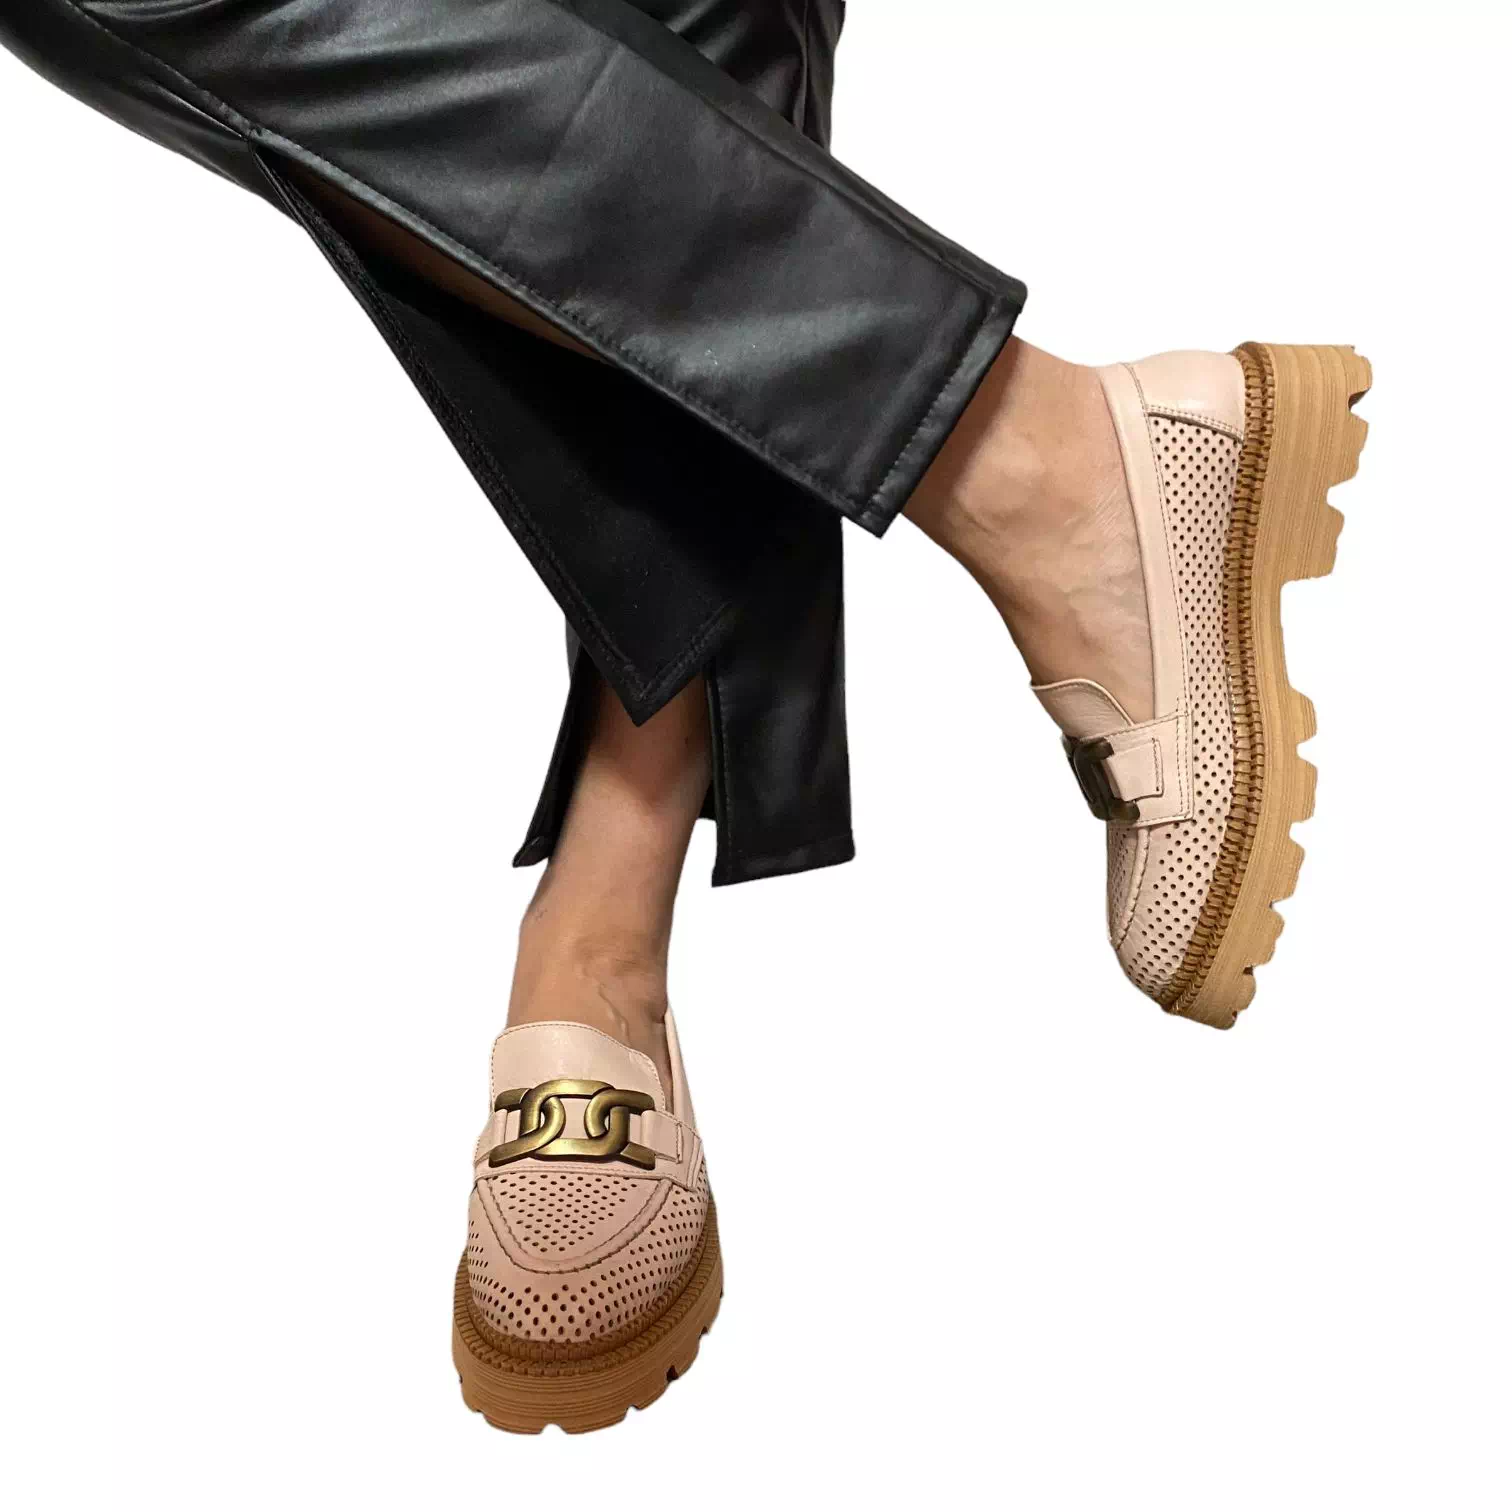 Pantofi Raxela pudra cu talpa confort si accesoriu